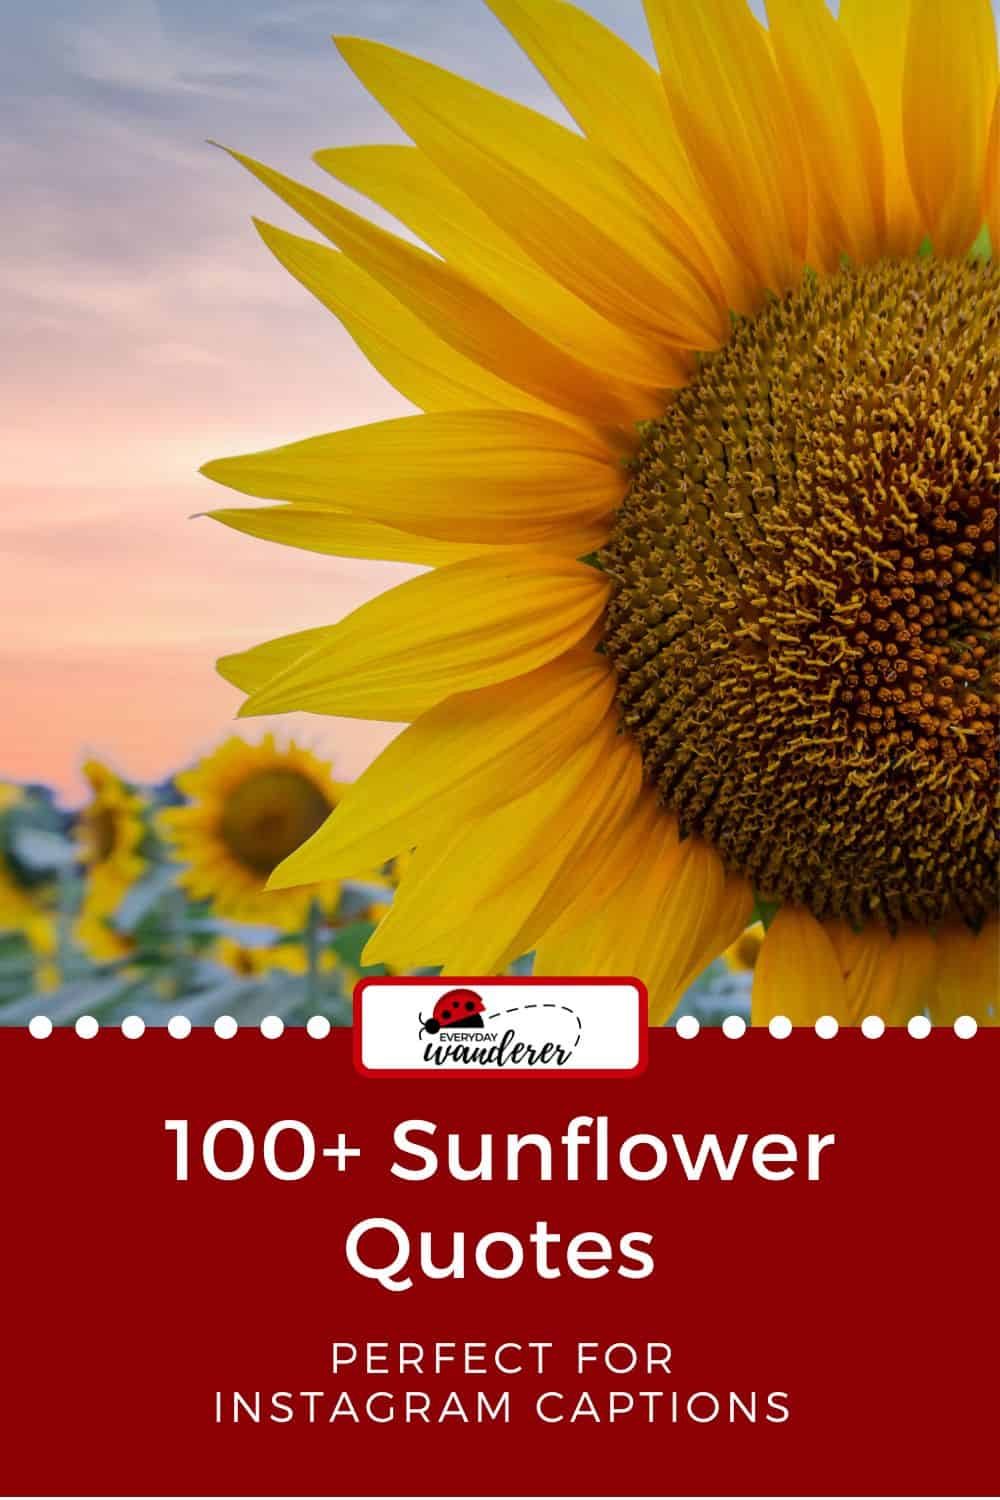 Sunflower Quotes - Pin 1 - JPG